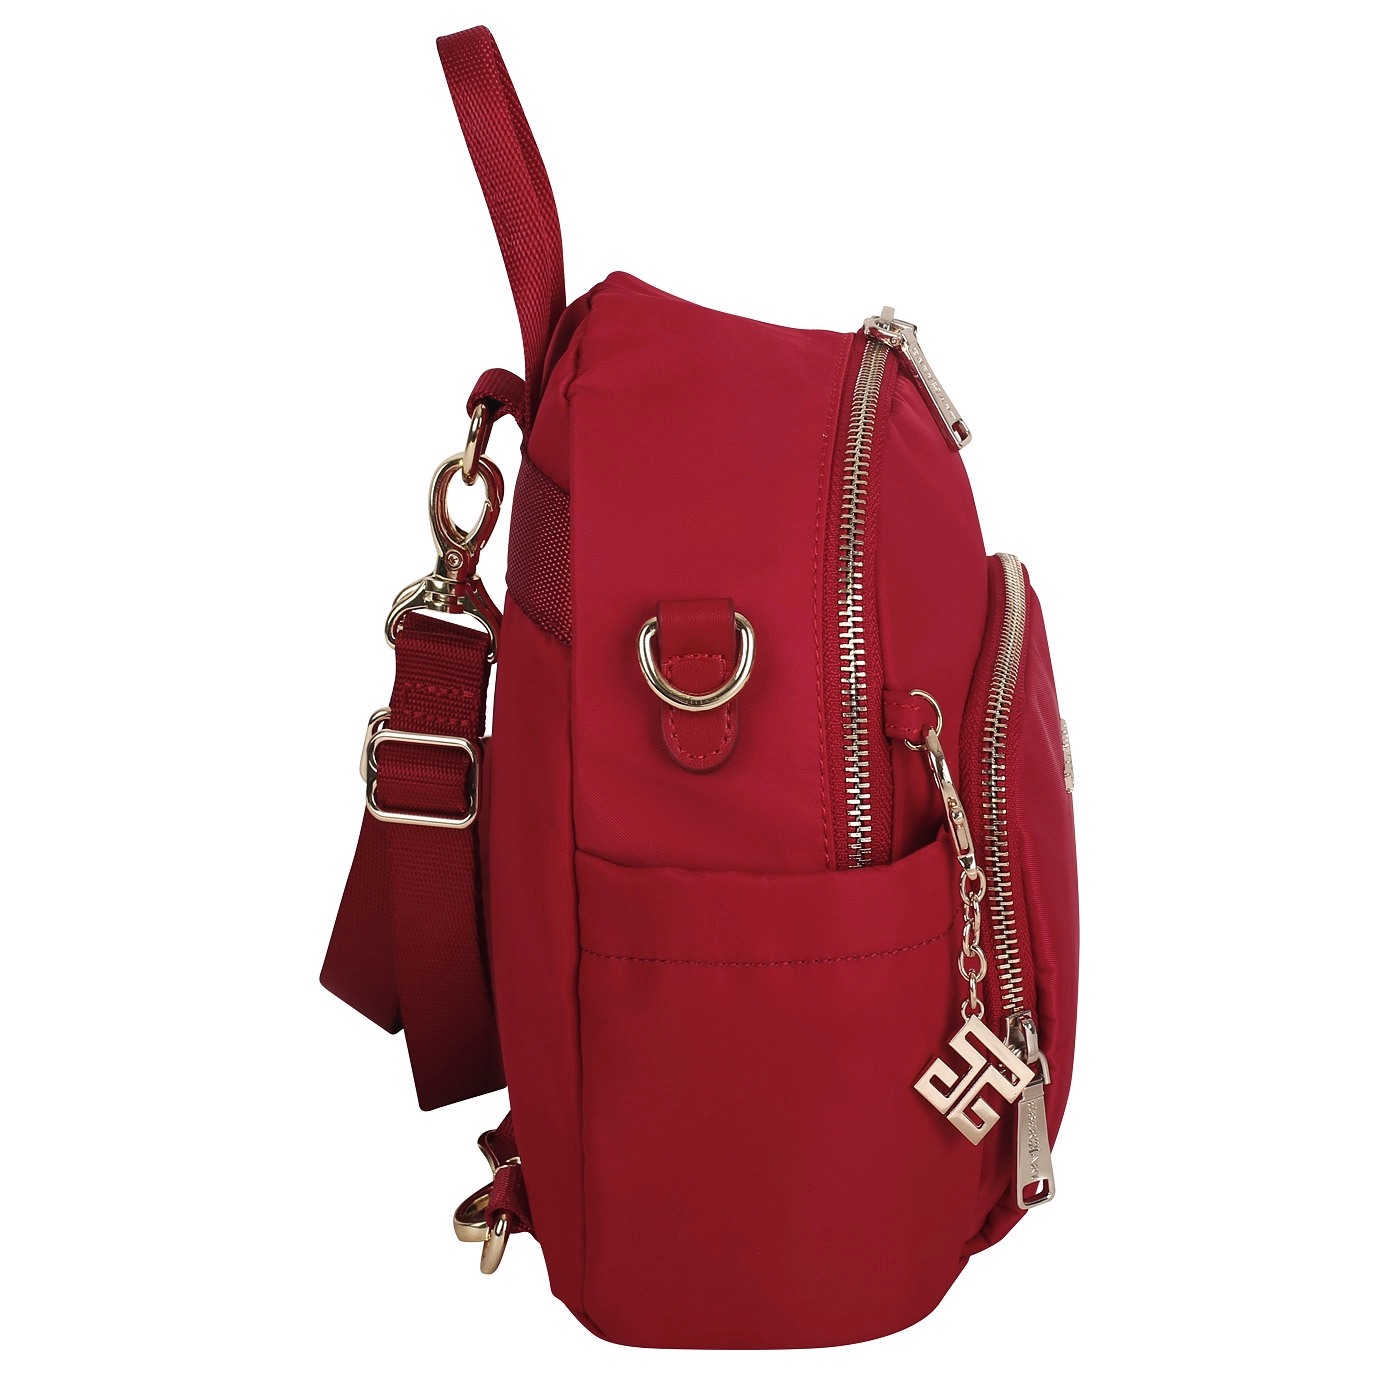 Рюкзак Eberhart Backpack красный EBH21963-R1 купить цена 8600.00 ₽